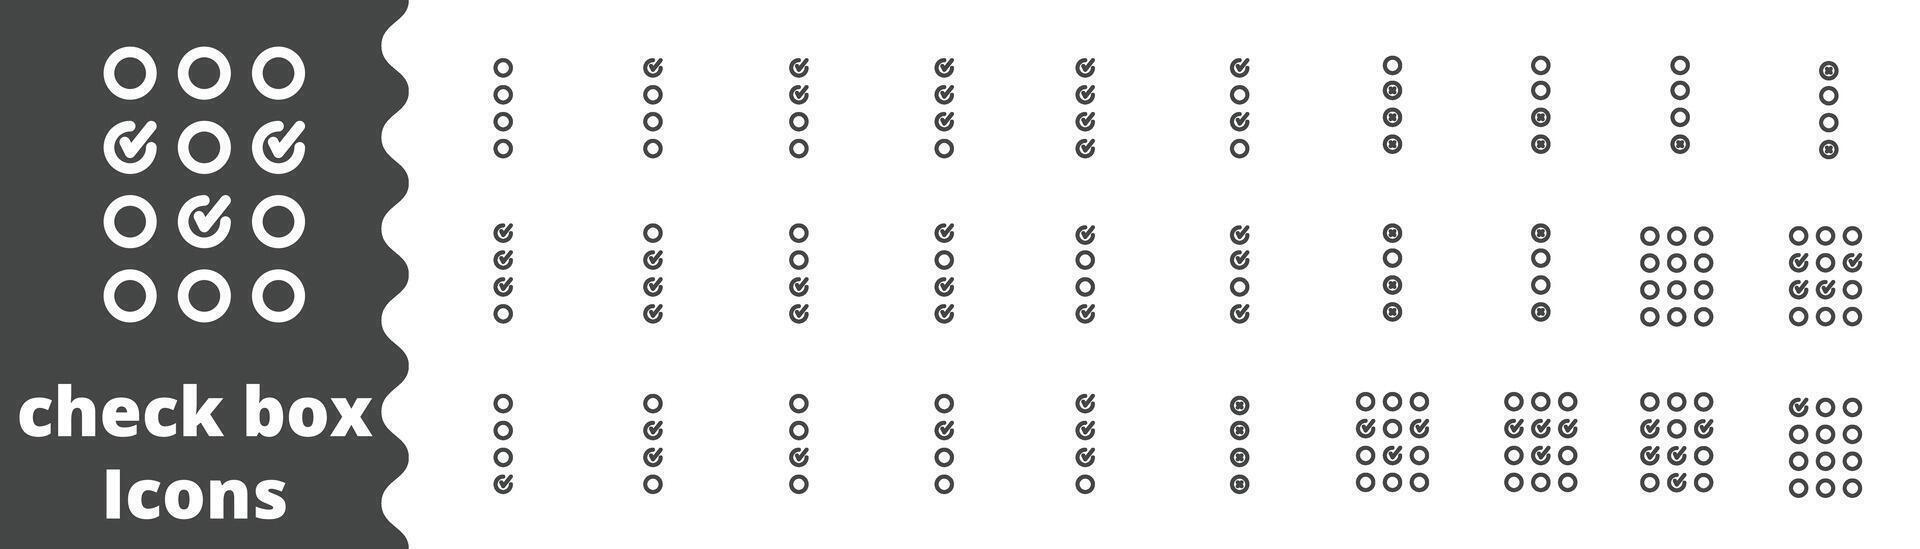 seta ícone Verifica caixa conjunto , diagrama, alvo, círculo, elemento, vetor